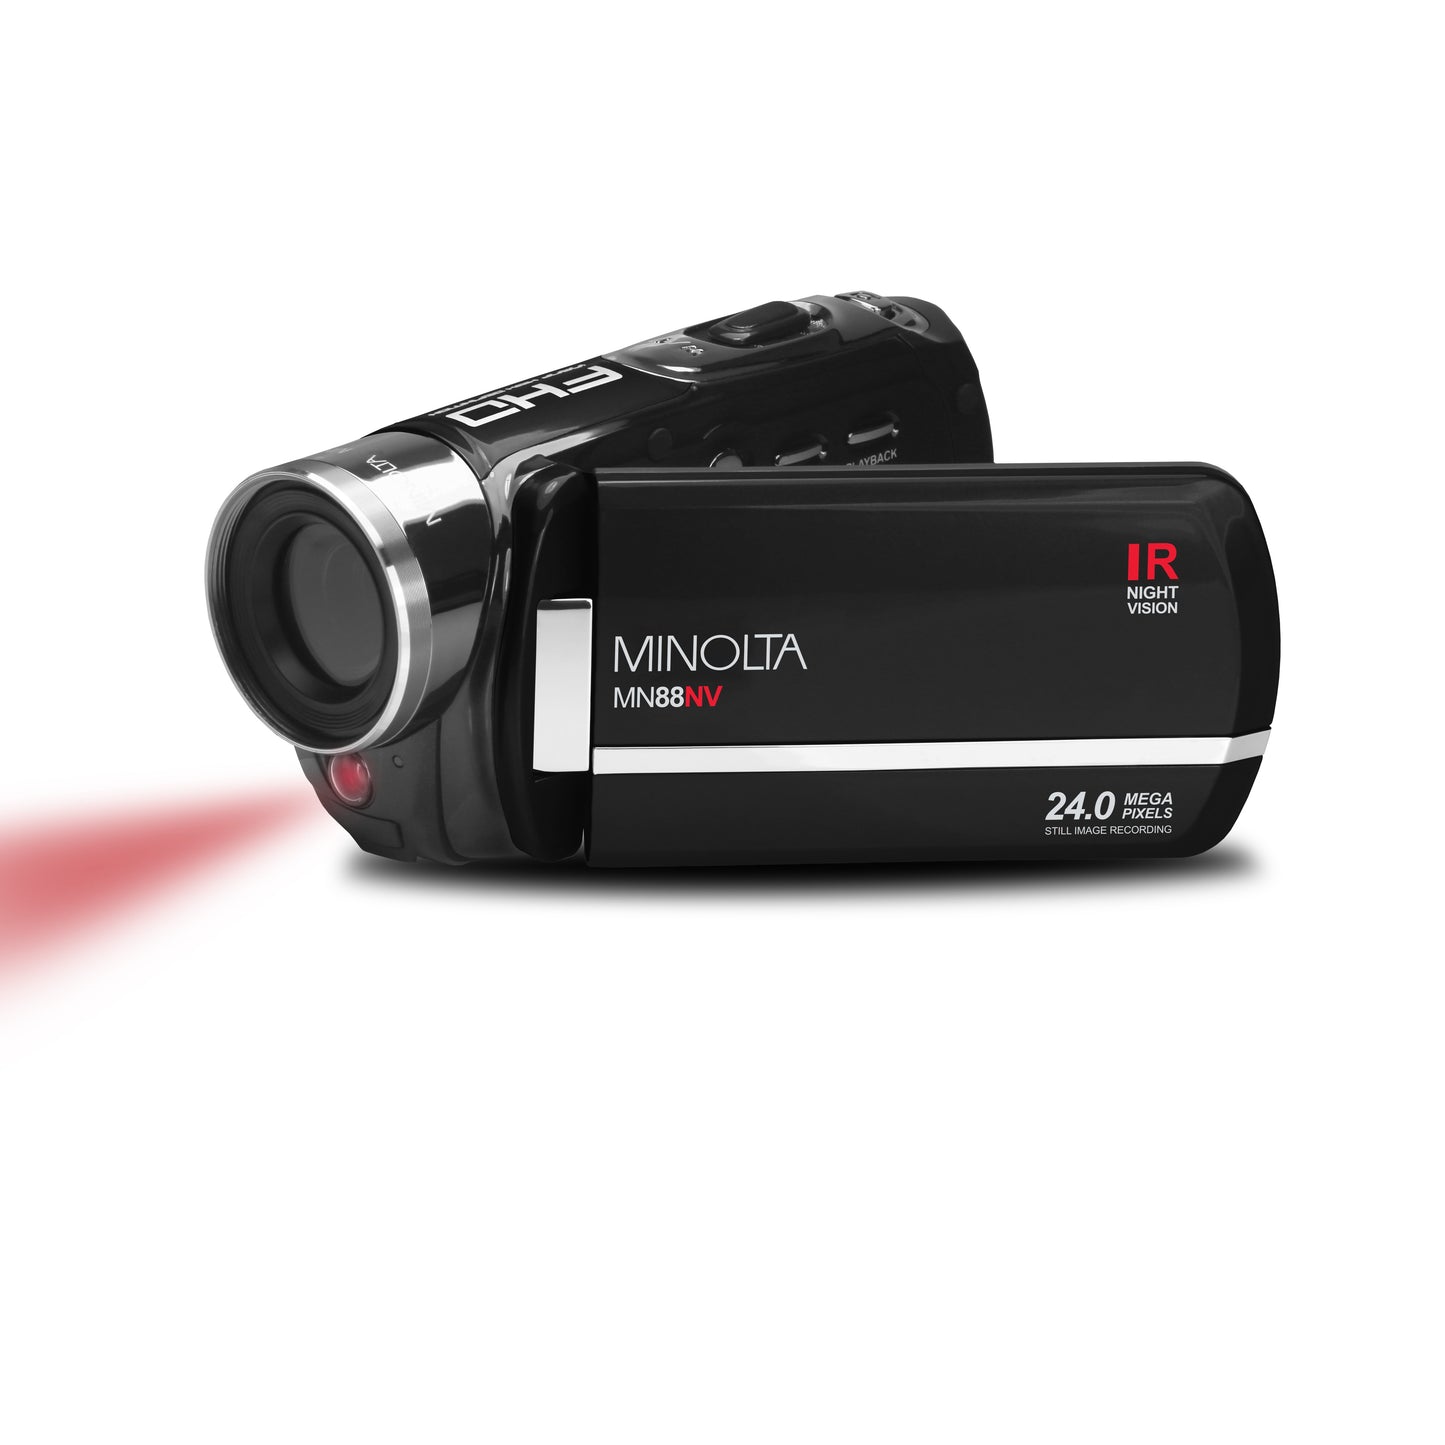 MN88NV 1080p Full HD IR Night Vision Camcorder